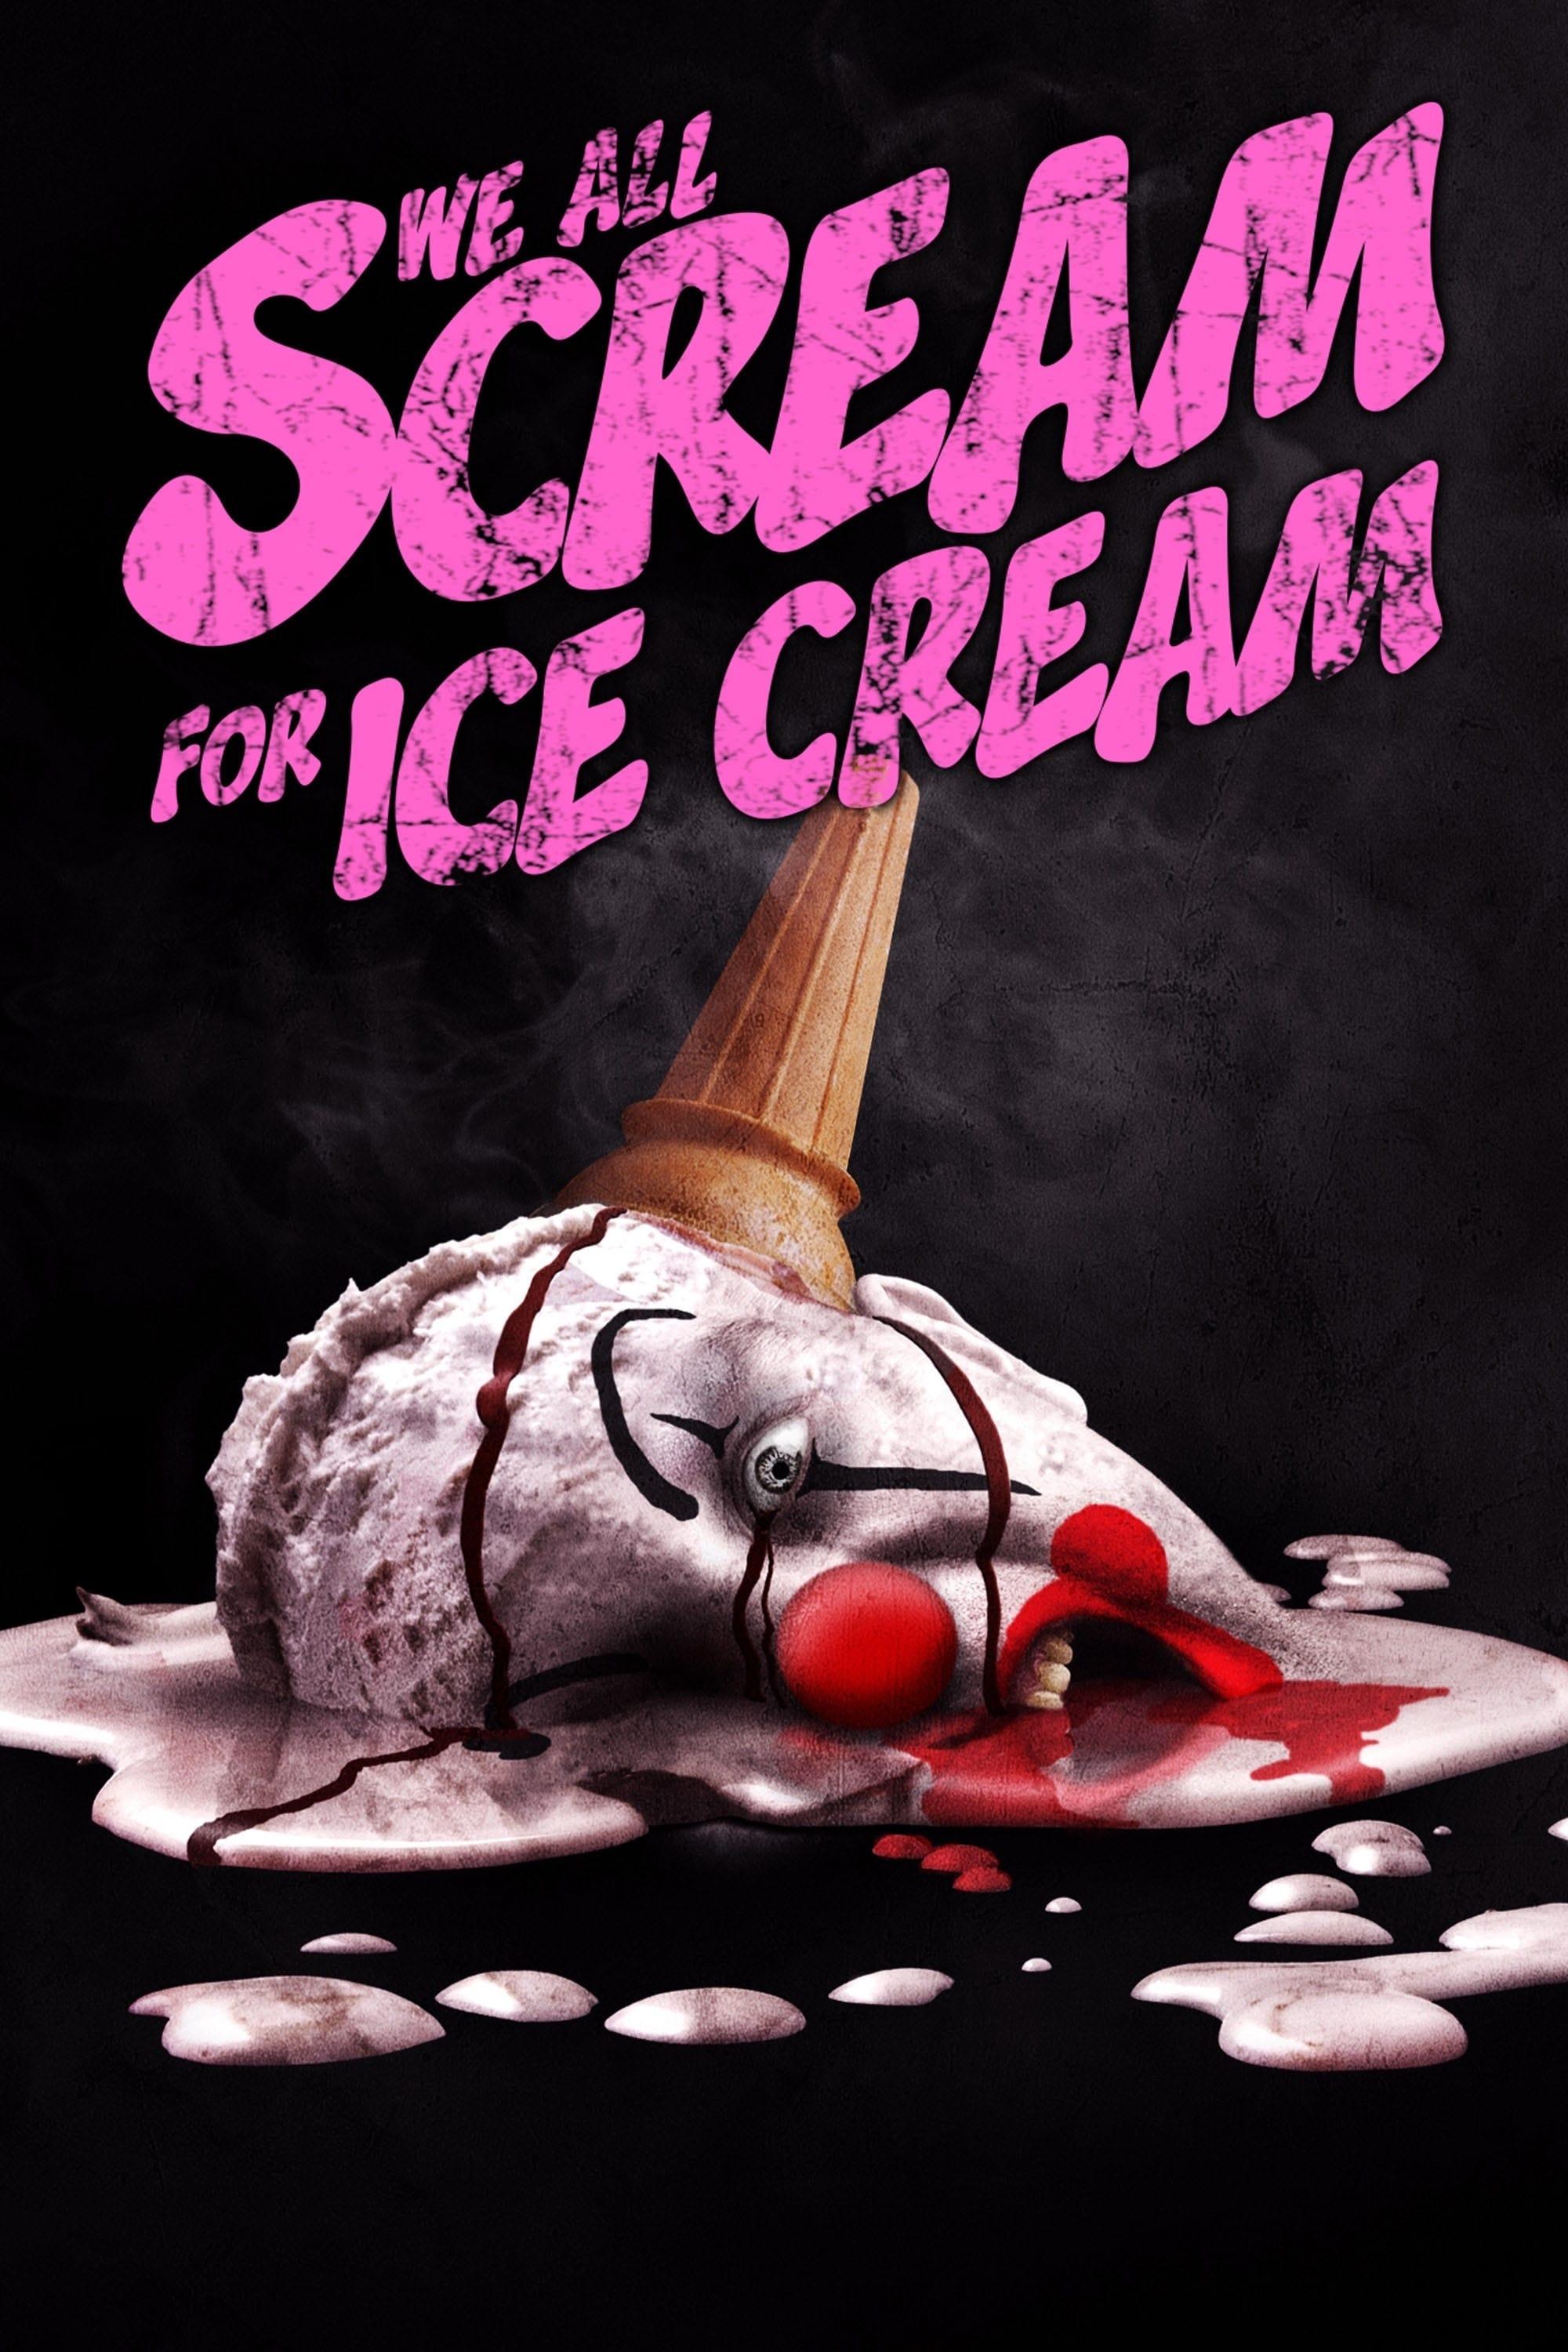 We All Scream for Ice Cream poster